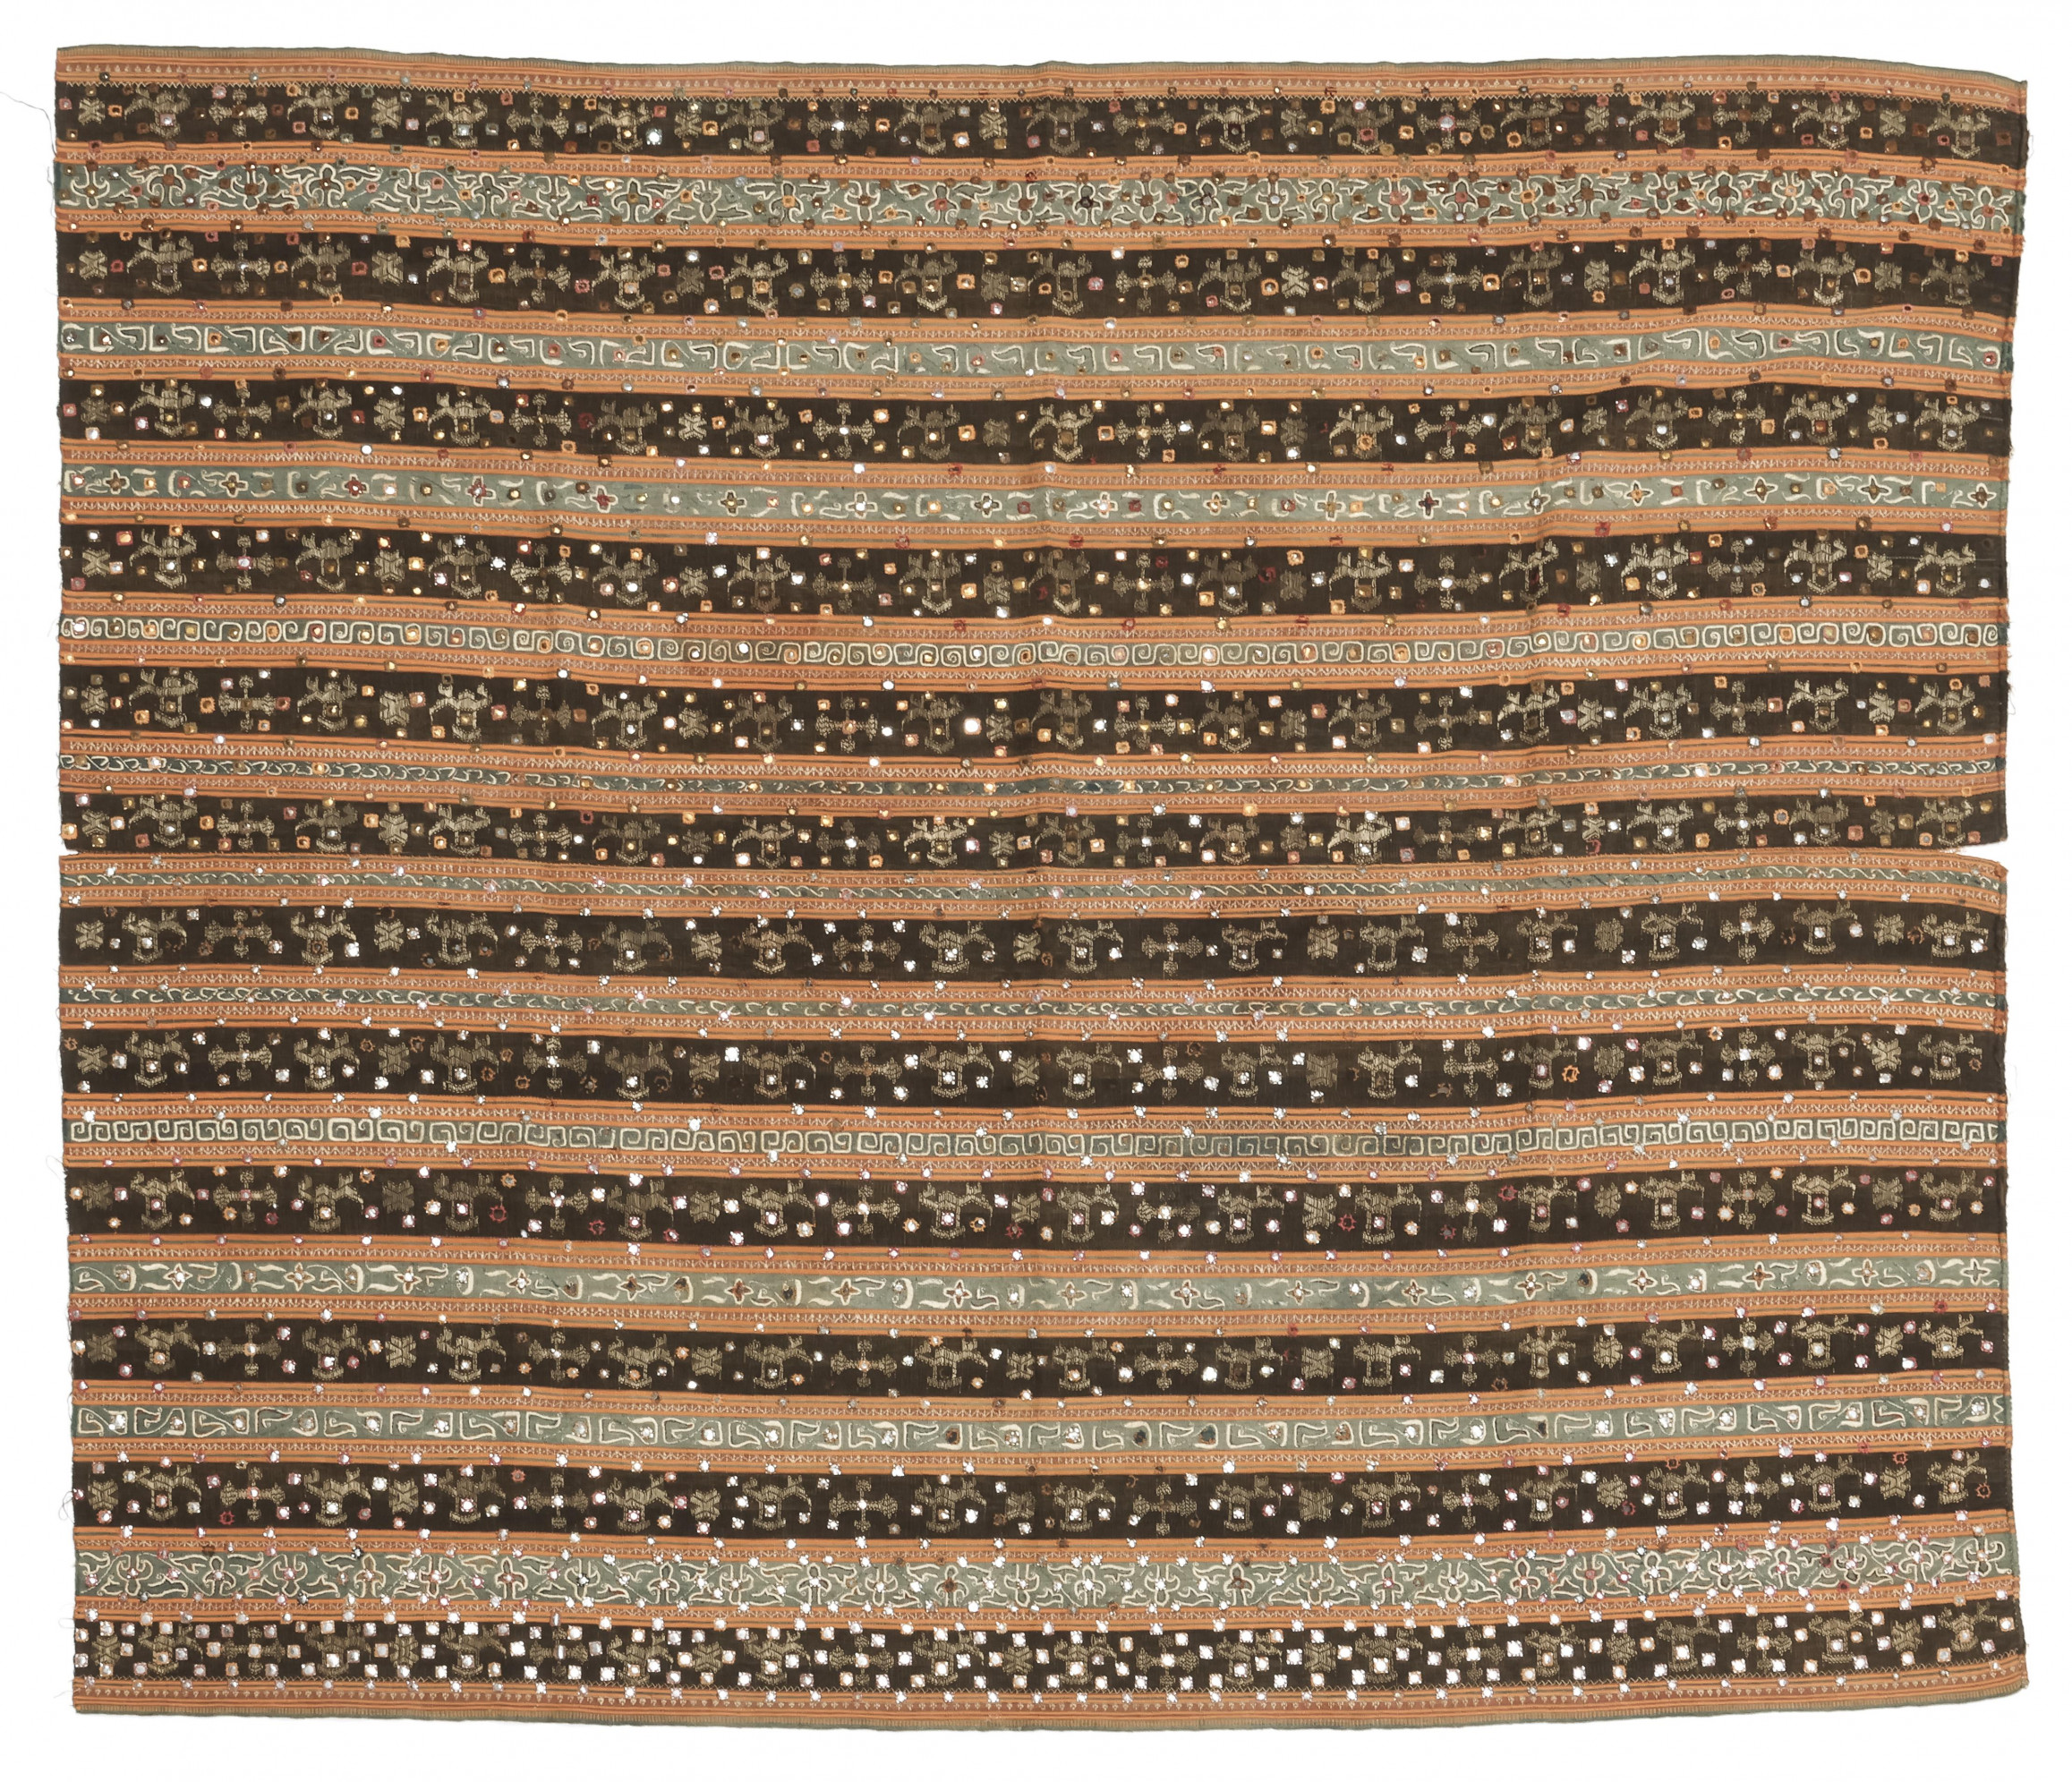 Sumatra, Lampung, ceremonial cloth, tapis,